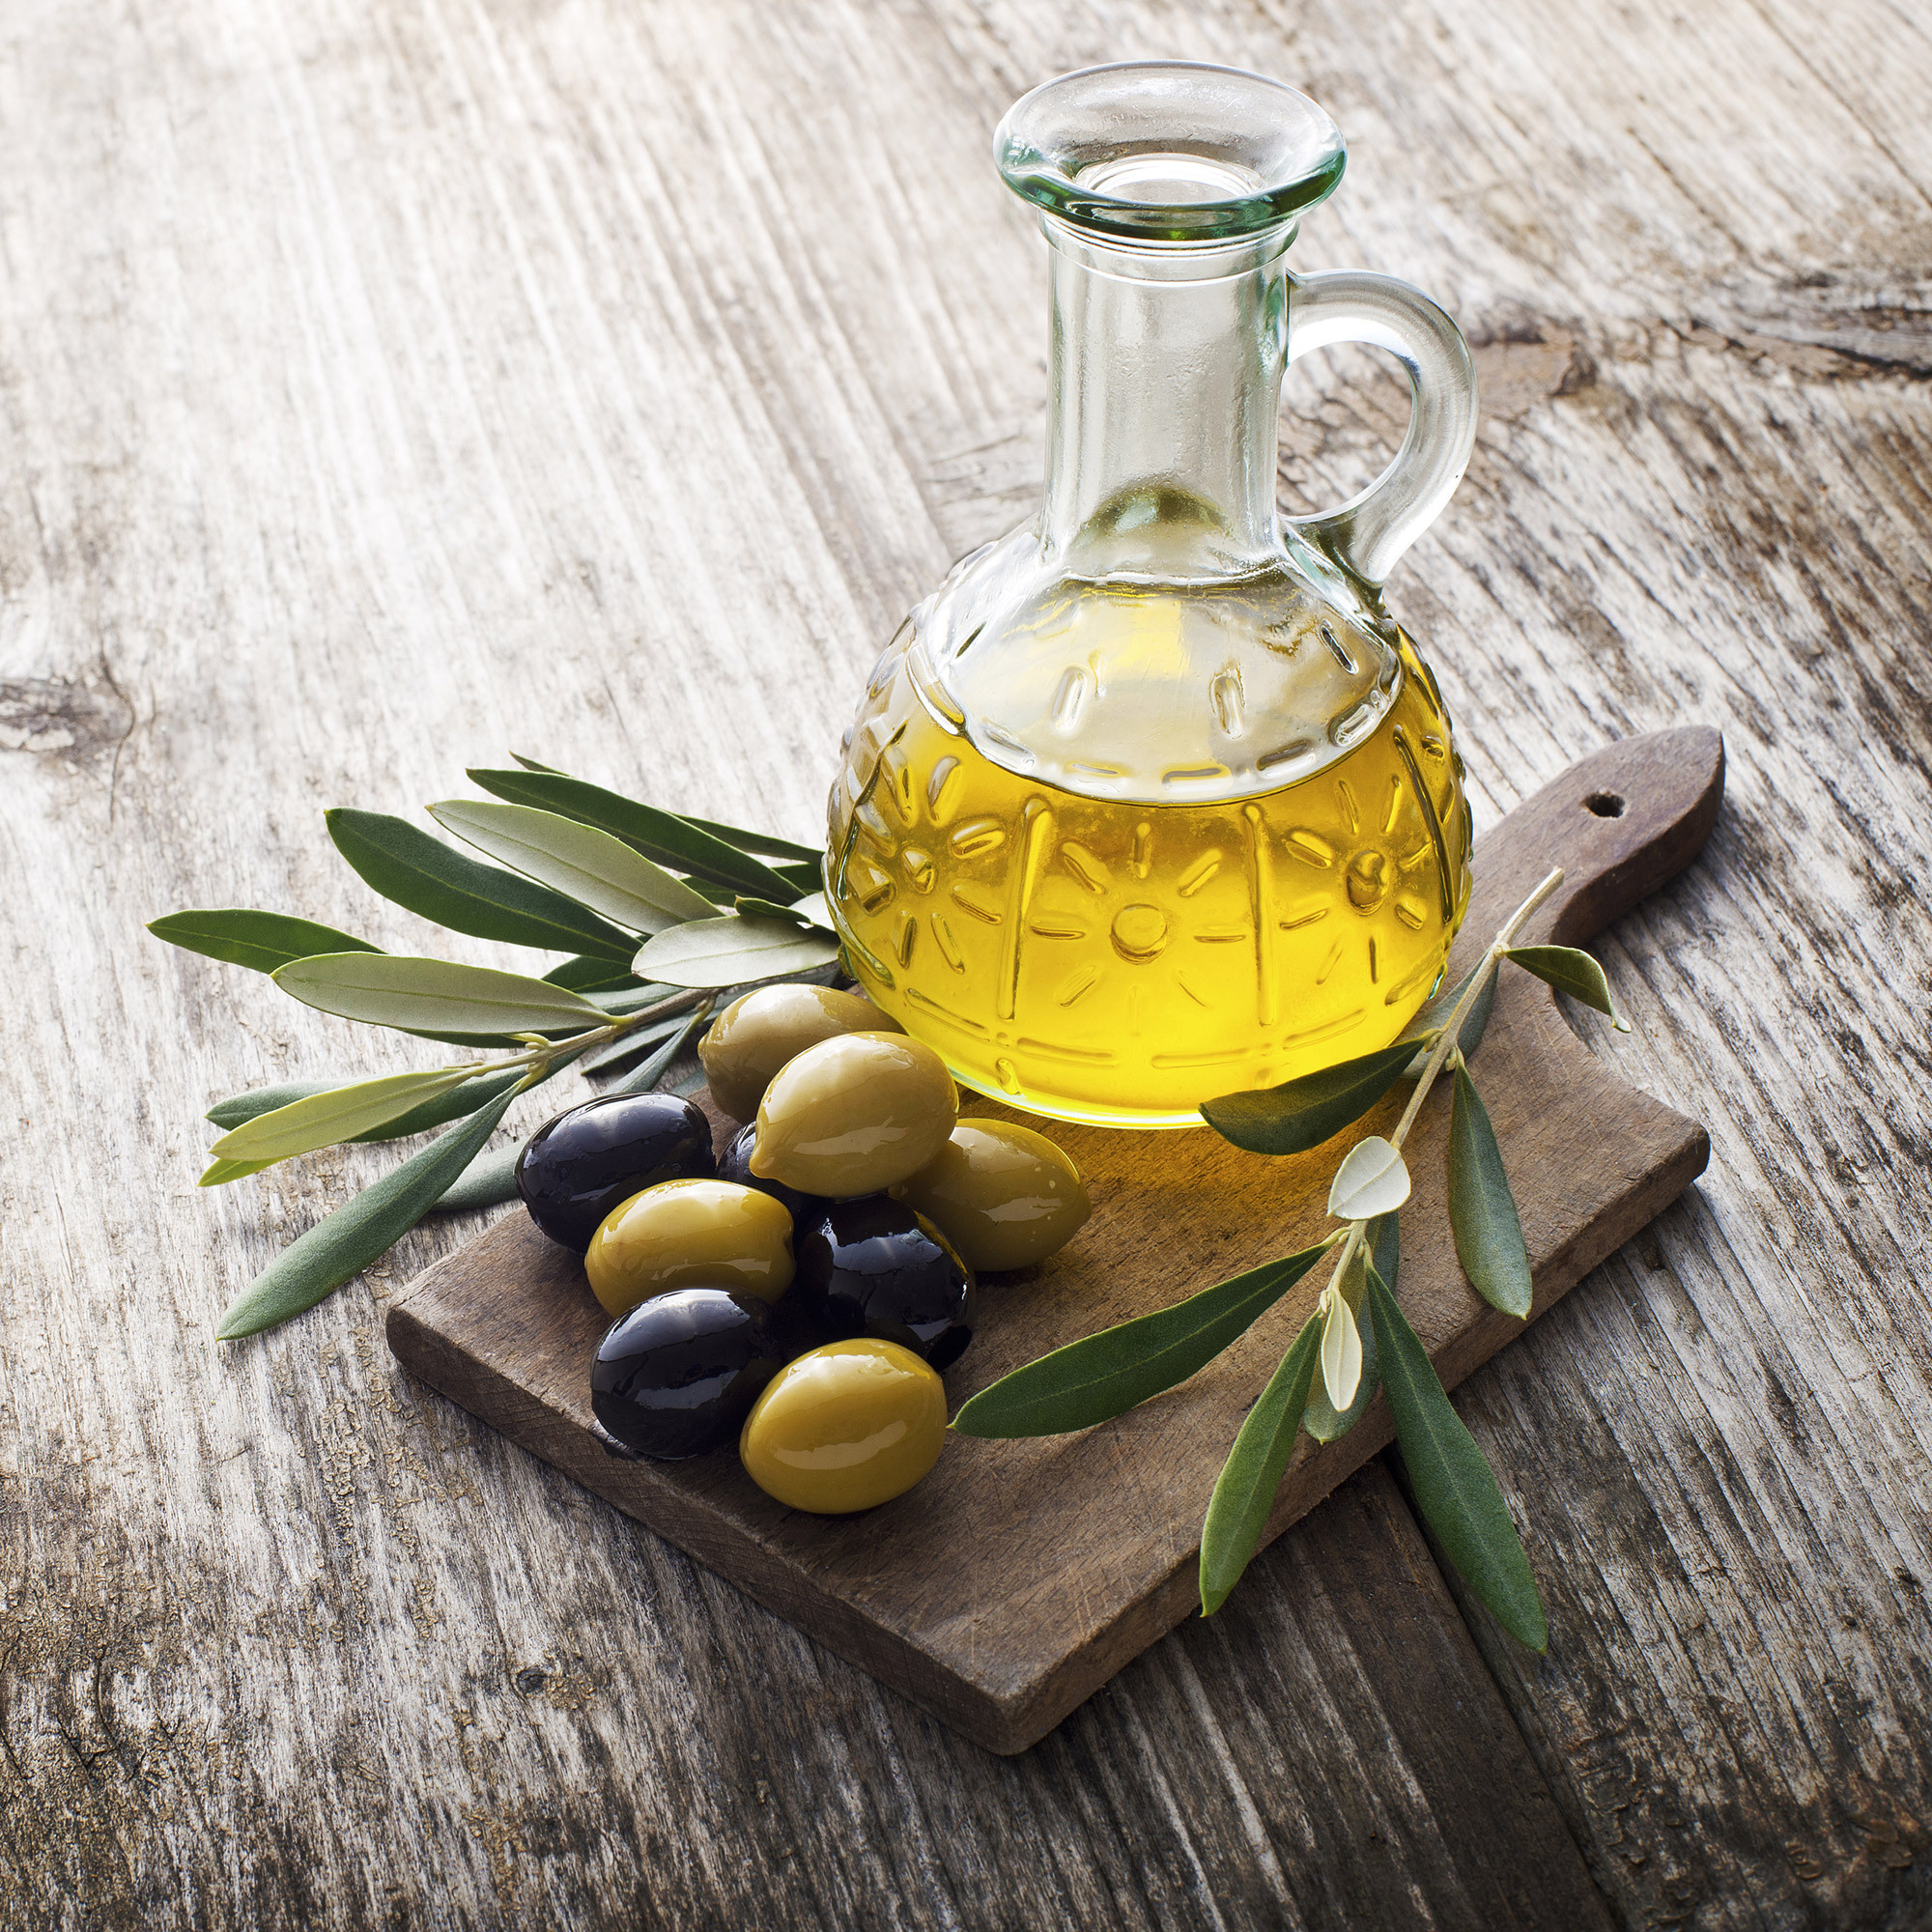 Olive Oil масло оливковое. Olive Olive для масла. Оливки и оливковое масло. Масло оливковое в графине.